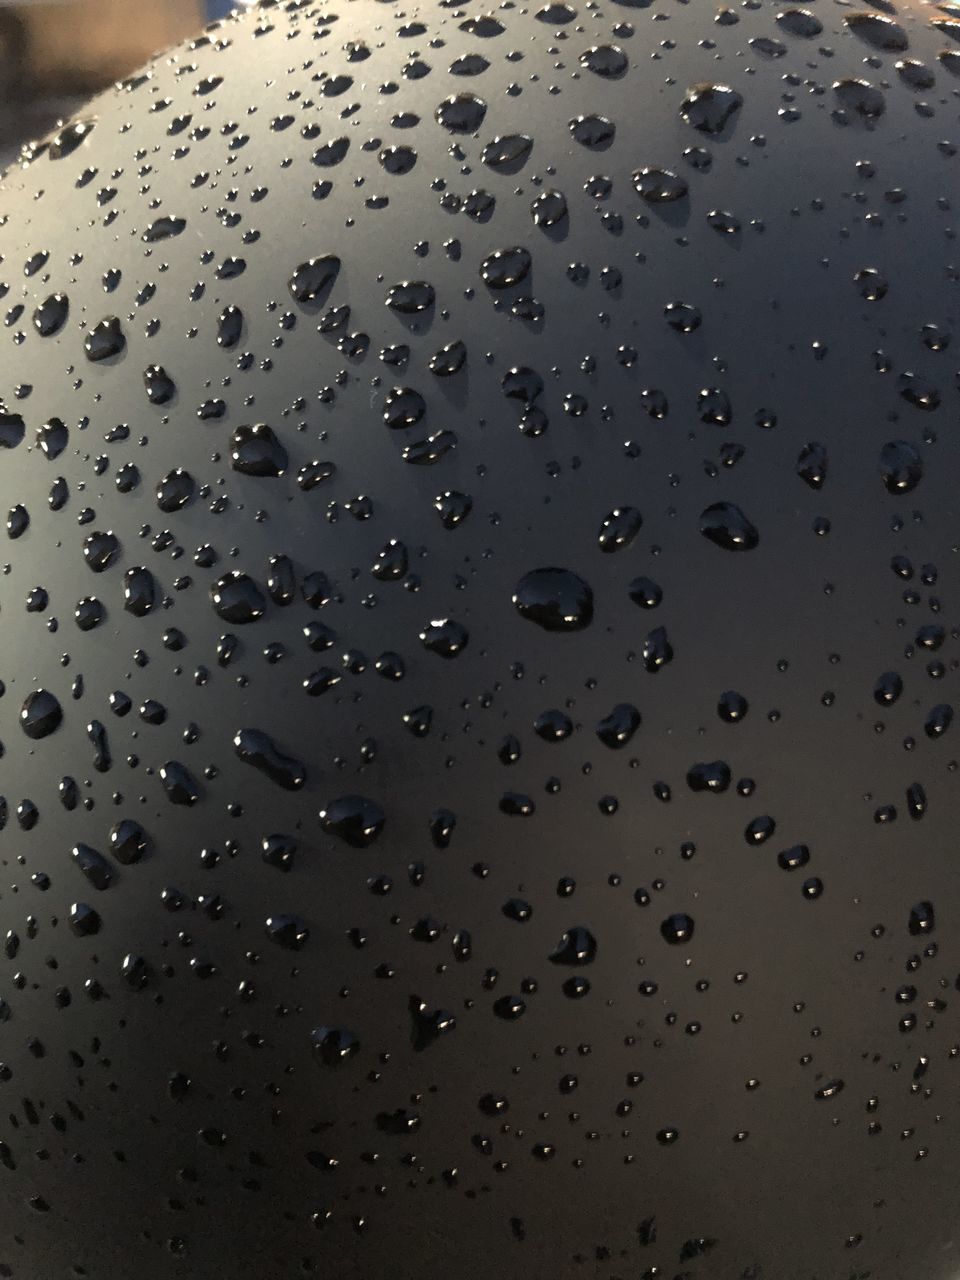 water, drop, wet, close-up, indoors, no people, nature, window, glass, rain, transparent, pattern